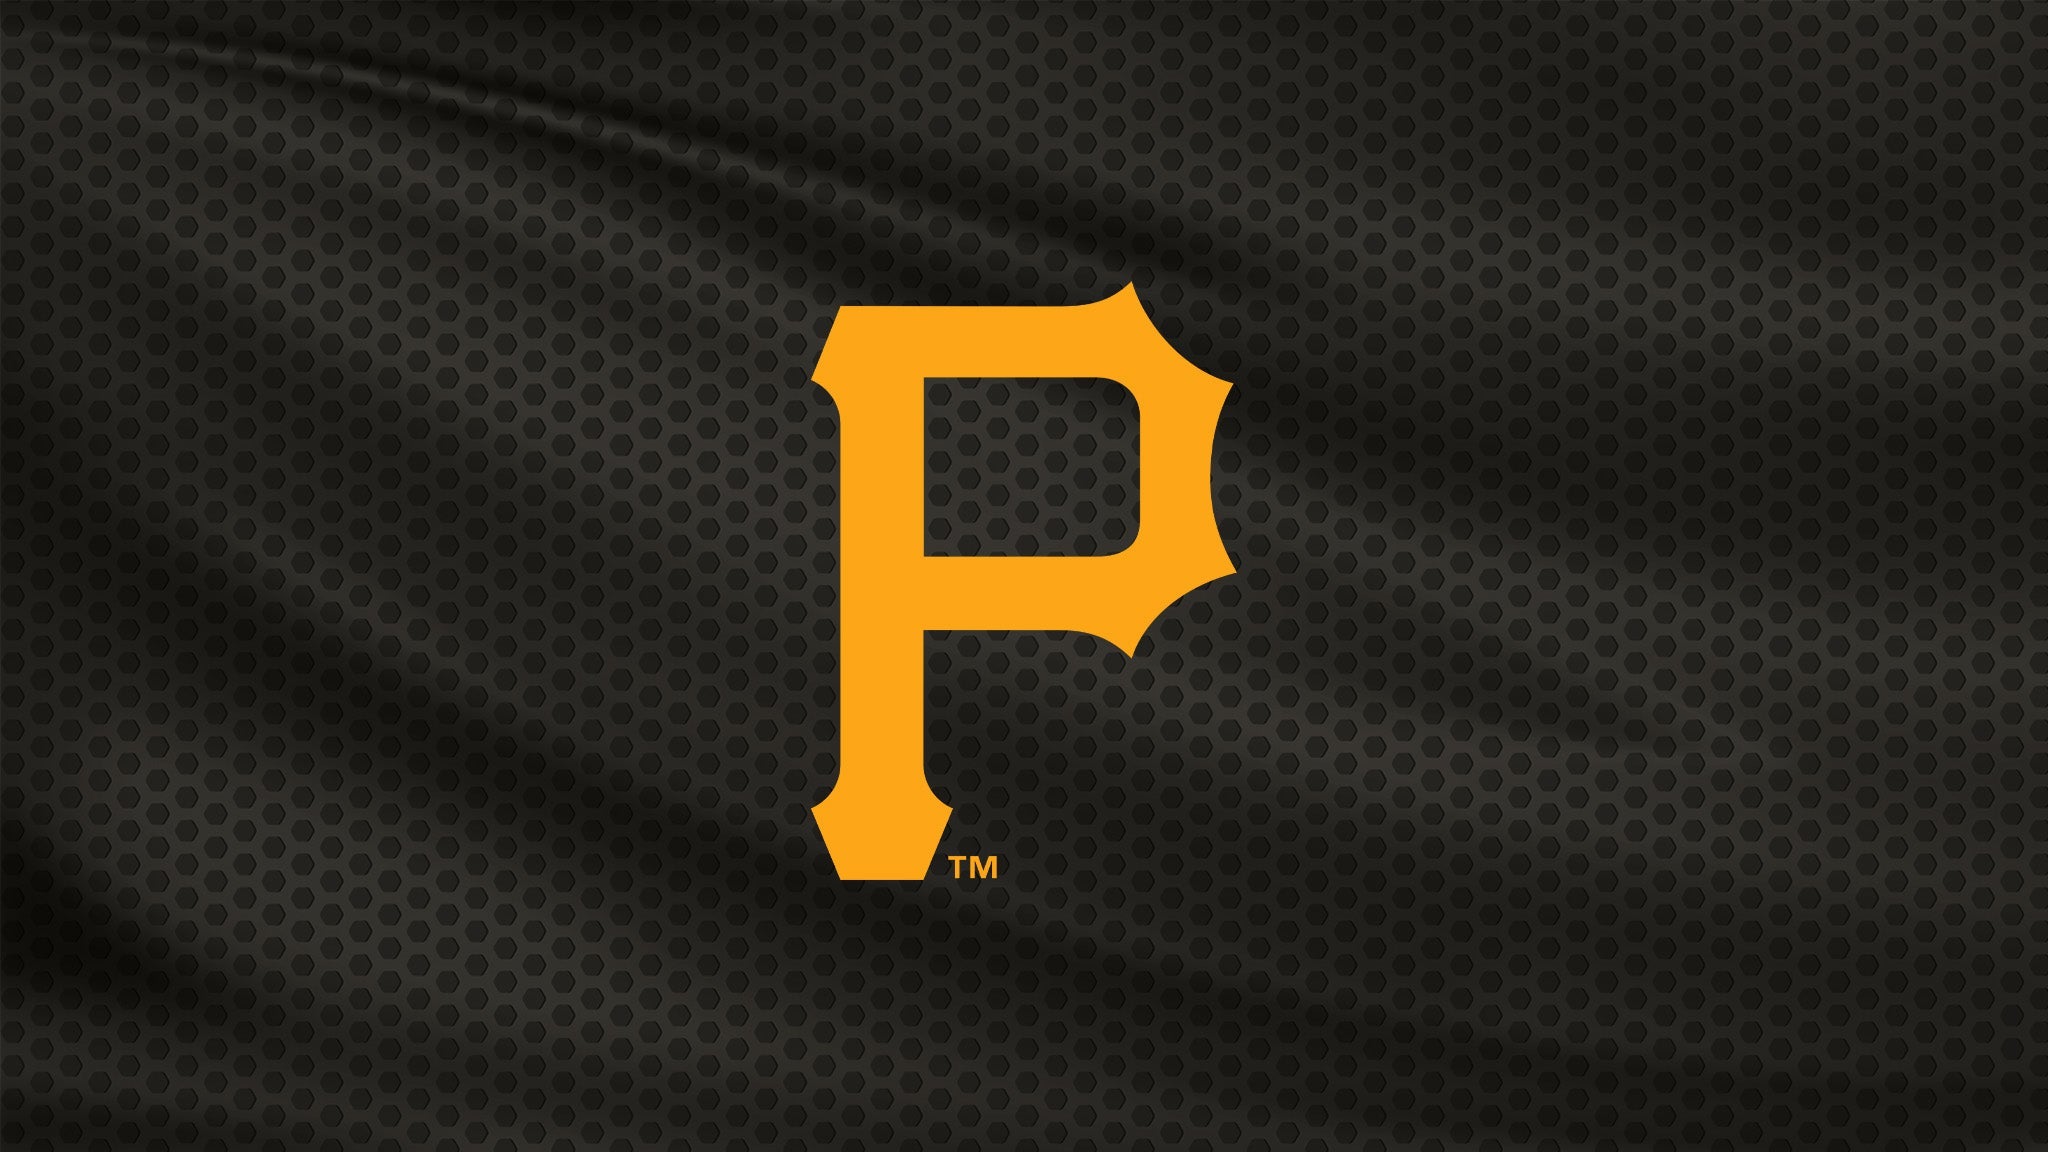 Pittsburgh Pirates vs. Baltimore Orioles at LECOM Park